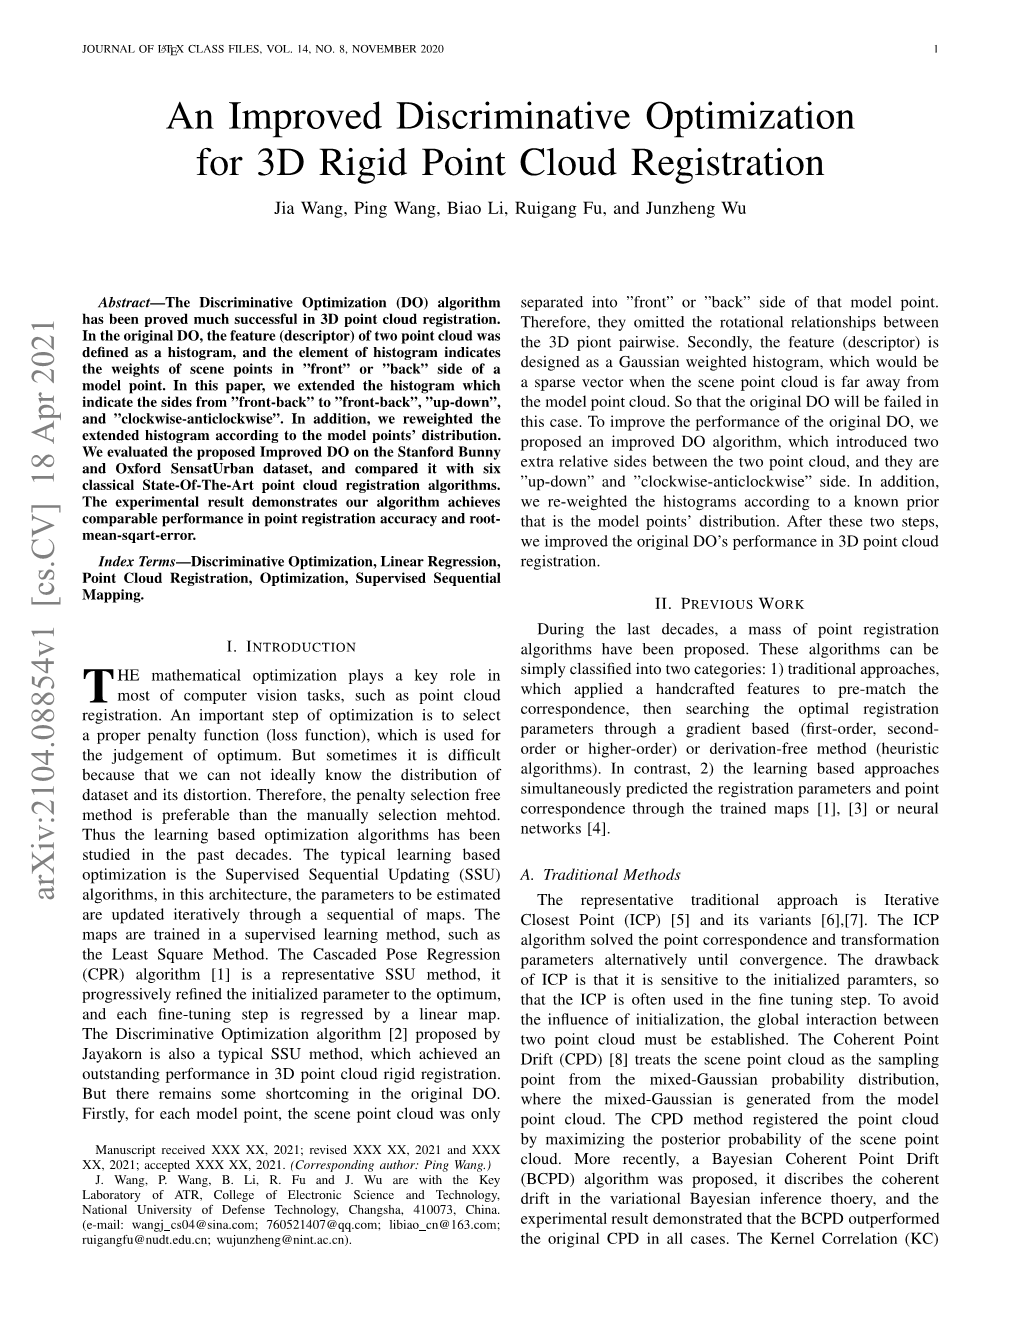 An Improved Discriminative Optimization for 3D Rigid Point Cloud Registration